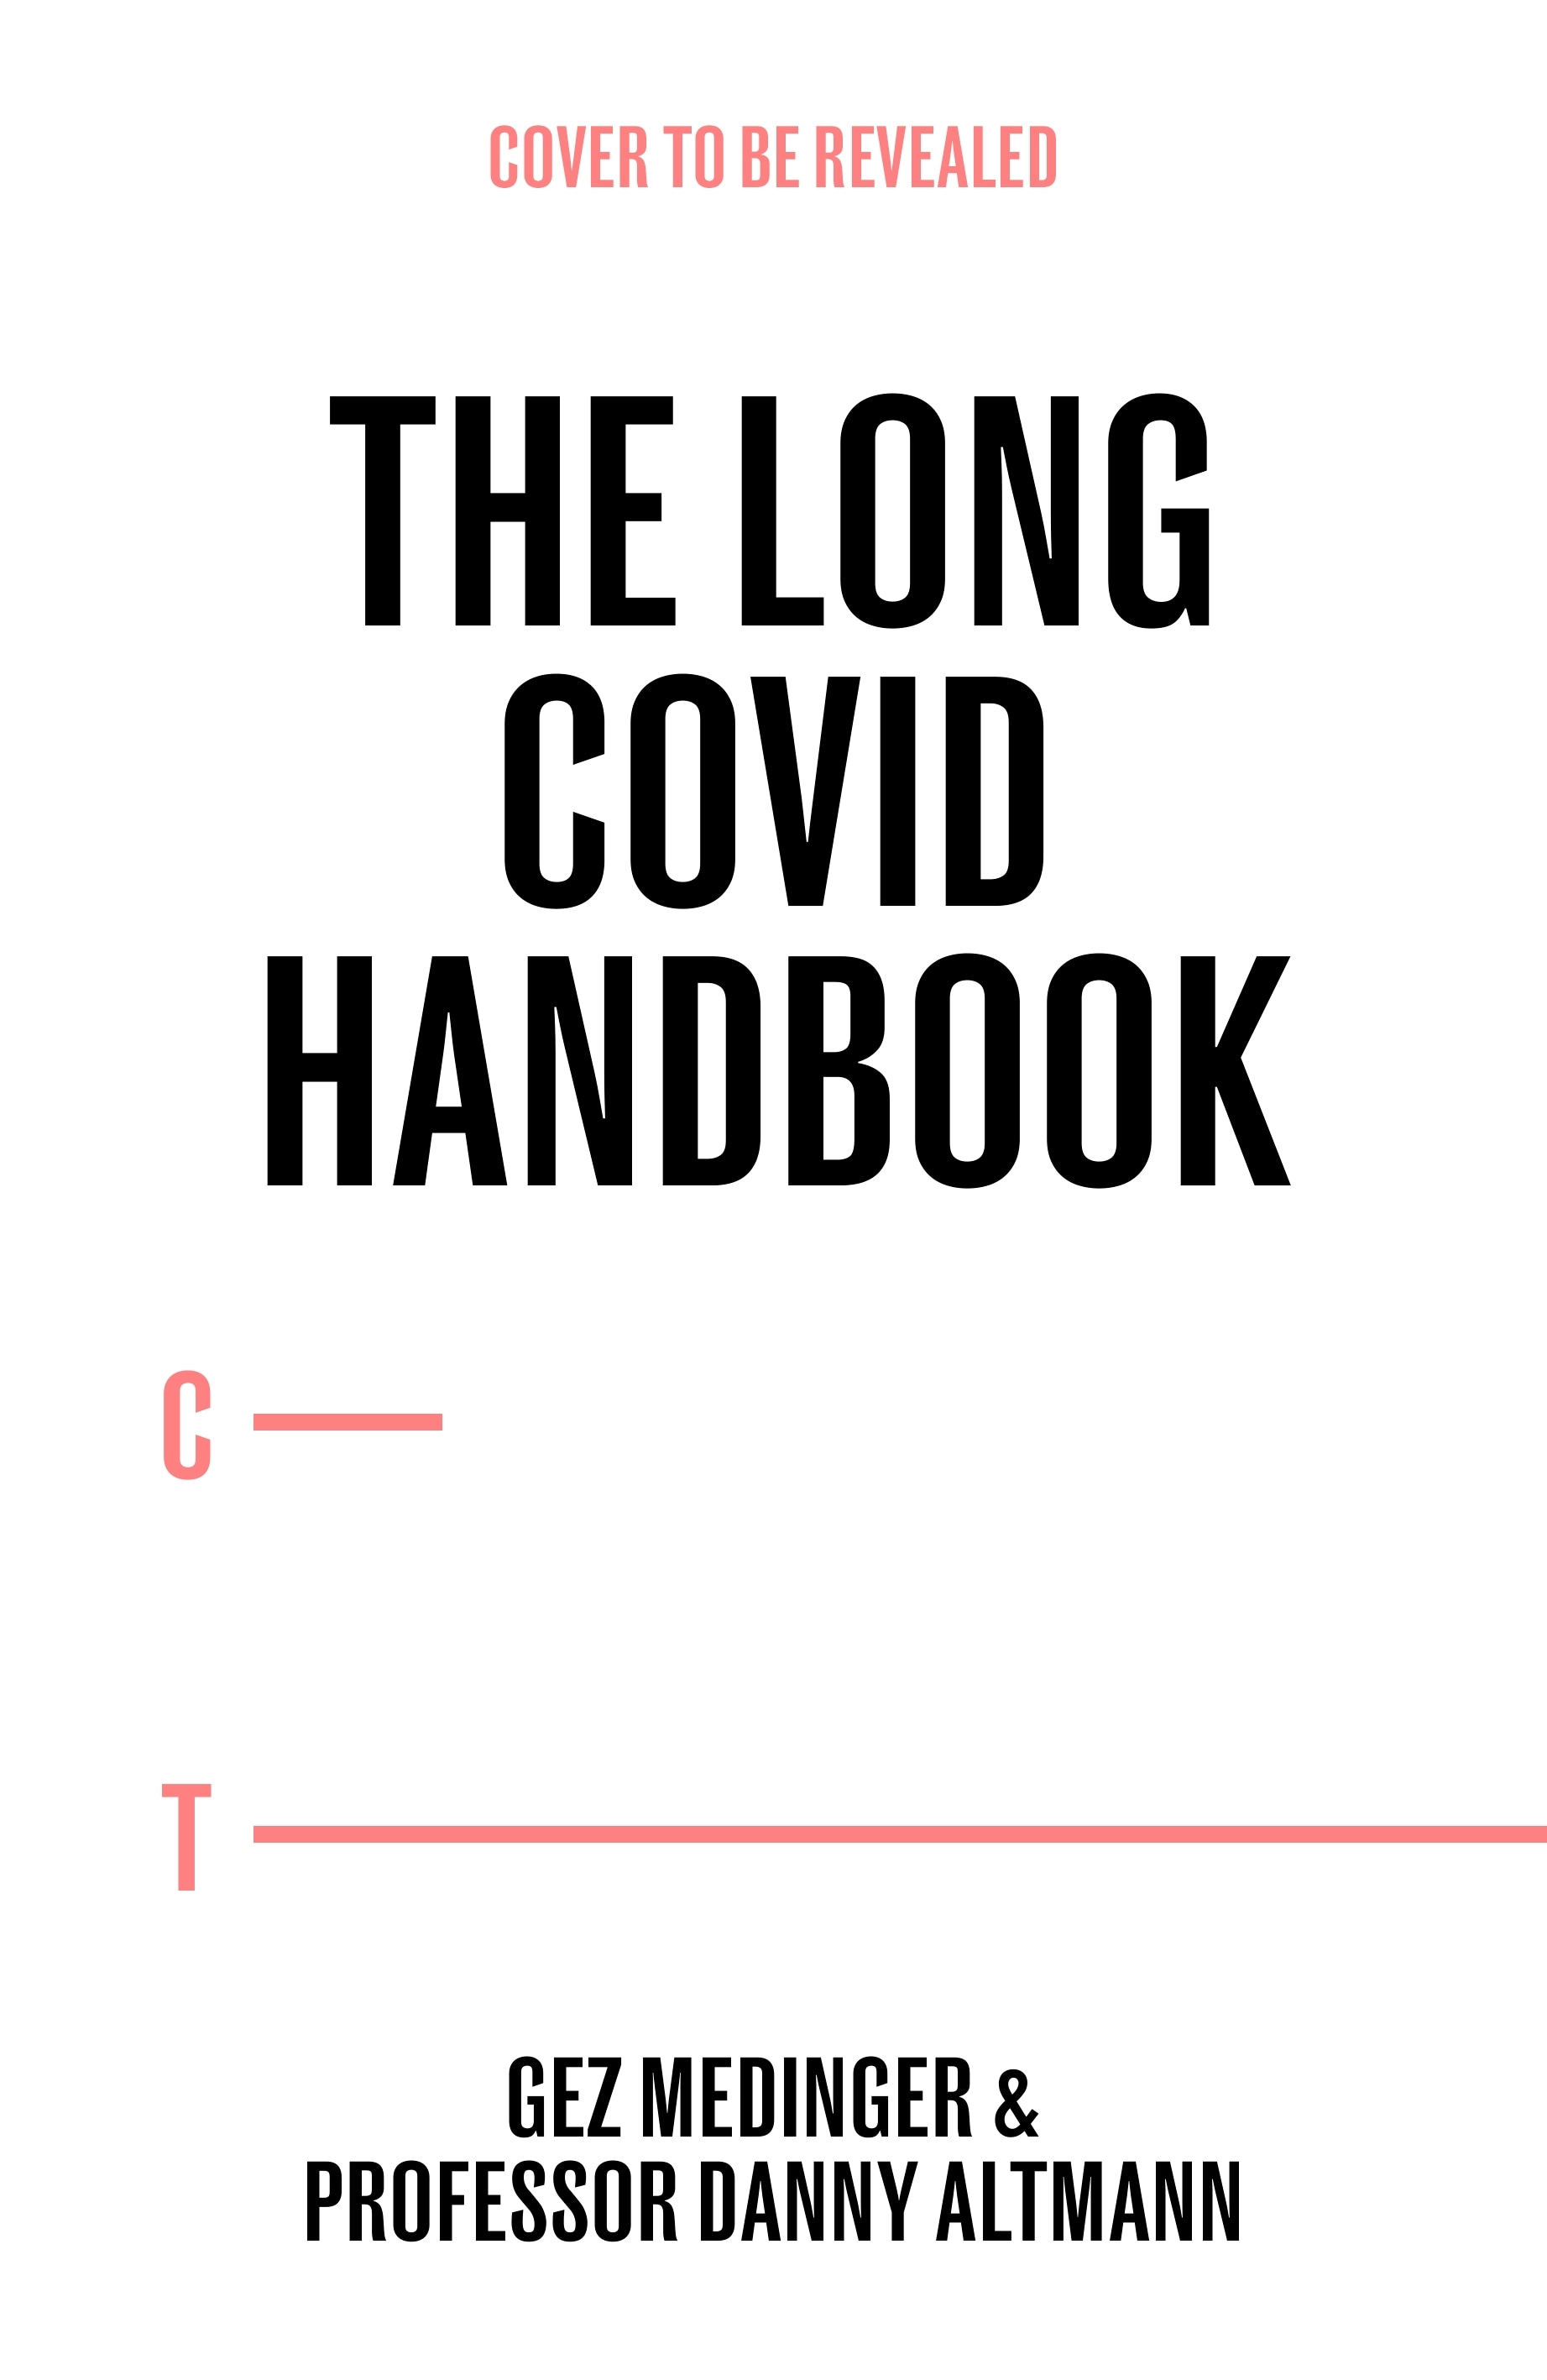 Book “The Long Covid Handbook” by Gez Medinger, Danny Altmann — October 20, 2022